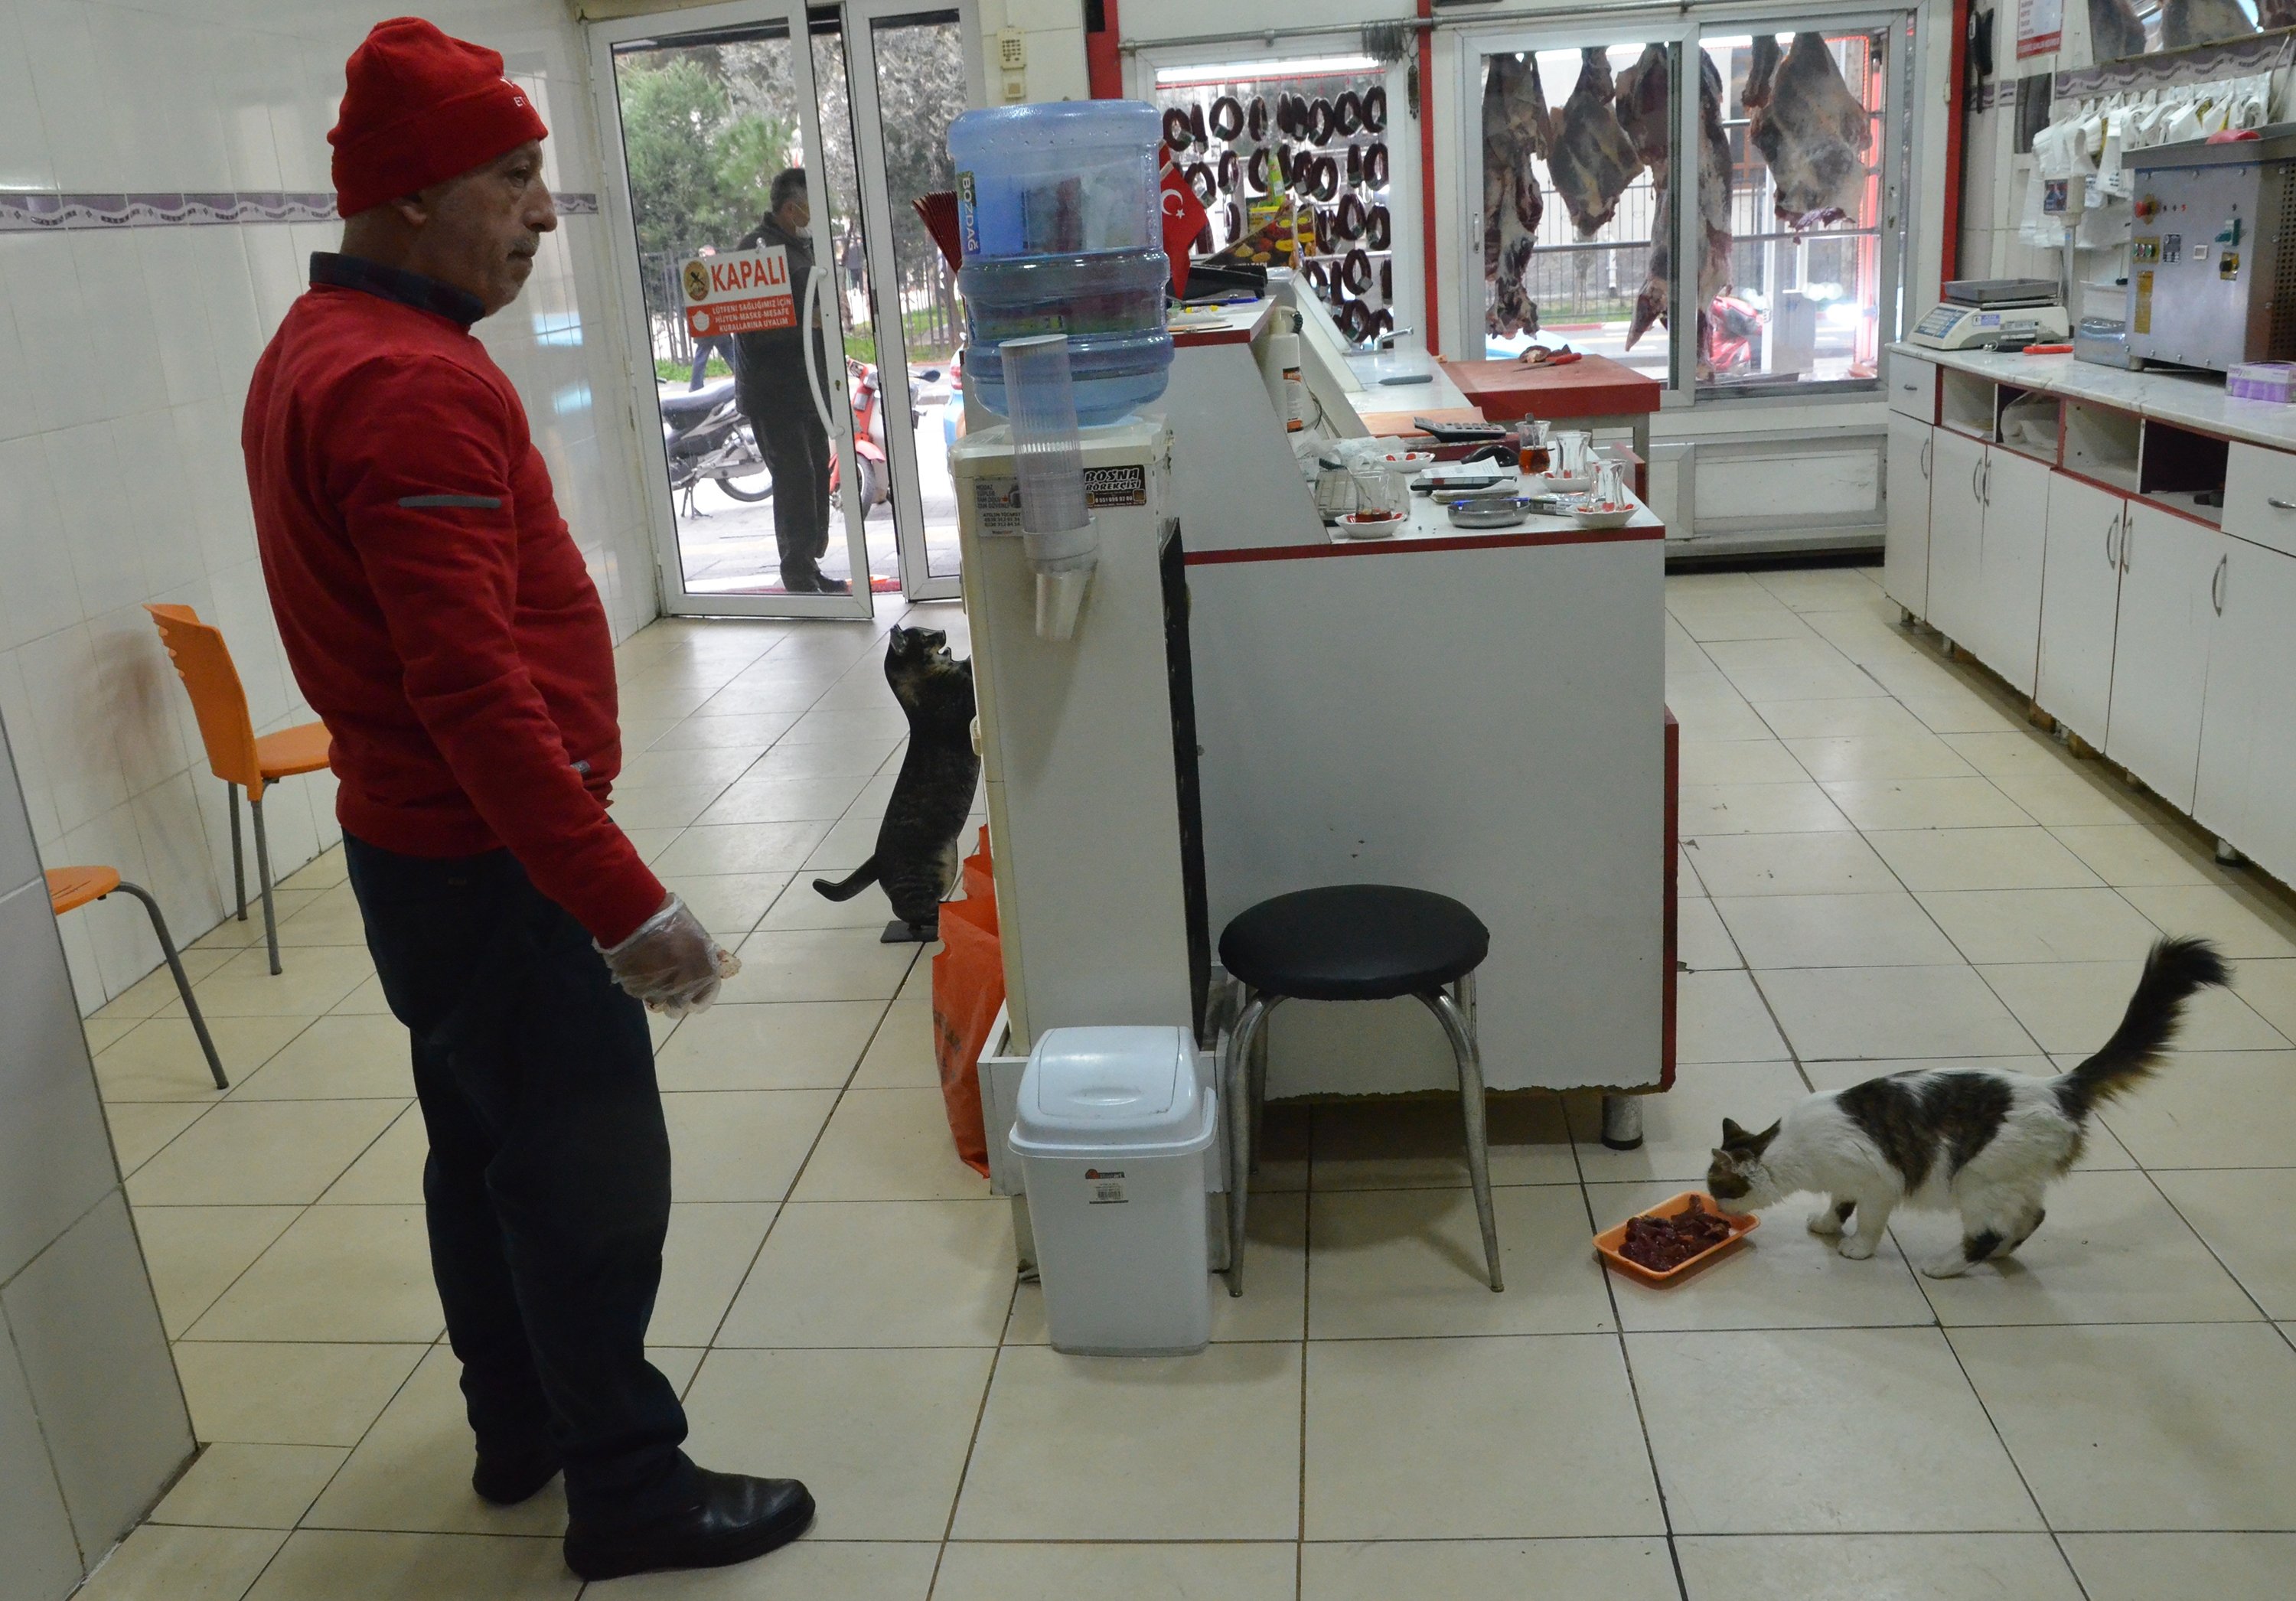 Seekor kucing memakan makanan yang disajikan tukang daging kepadanya sementara yang lain memeriksa produk di latar belakang, di Manisa, Turki barat, 14 Maret 2022. (AA Photo)